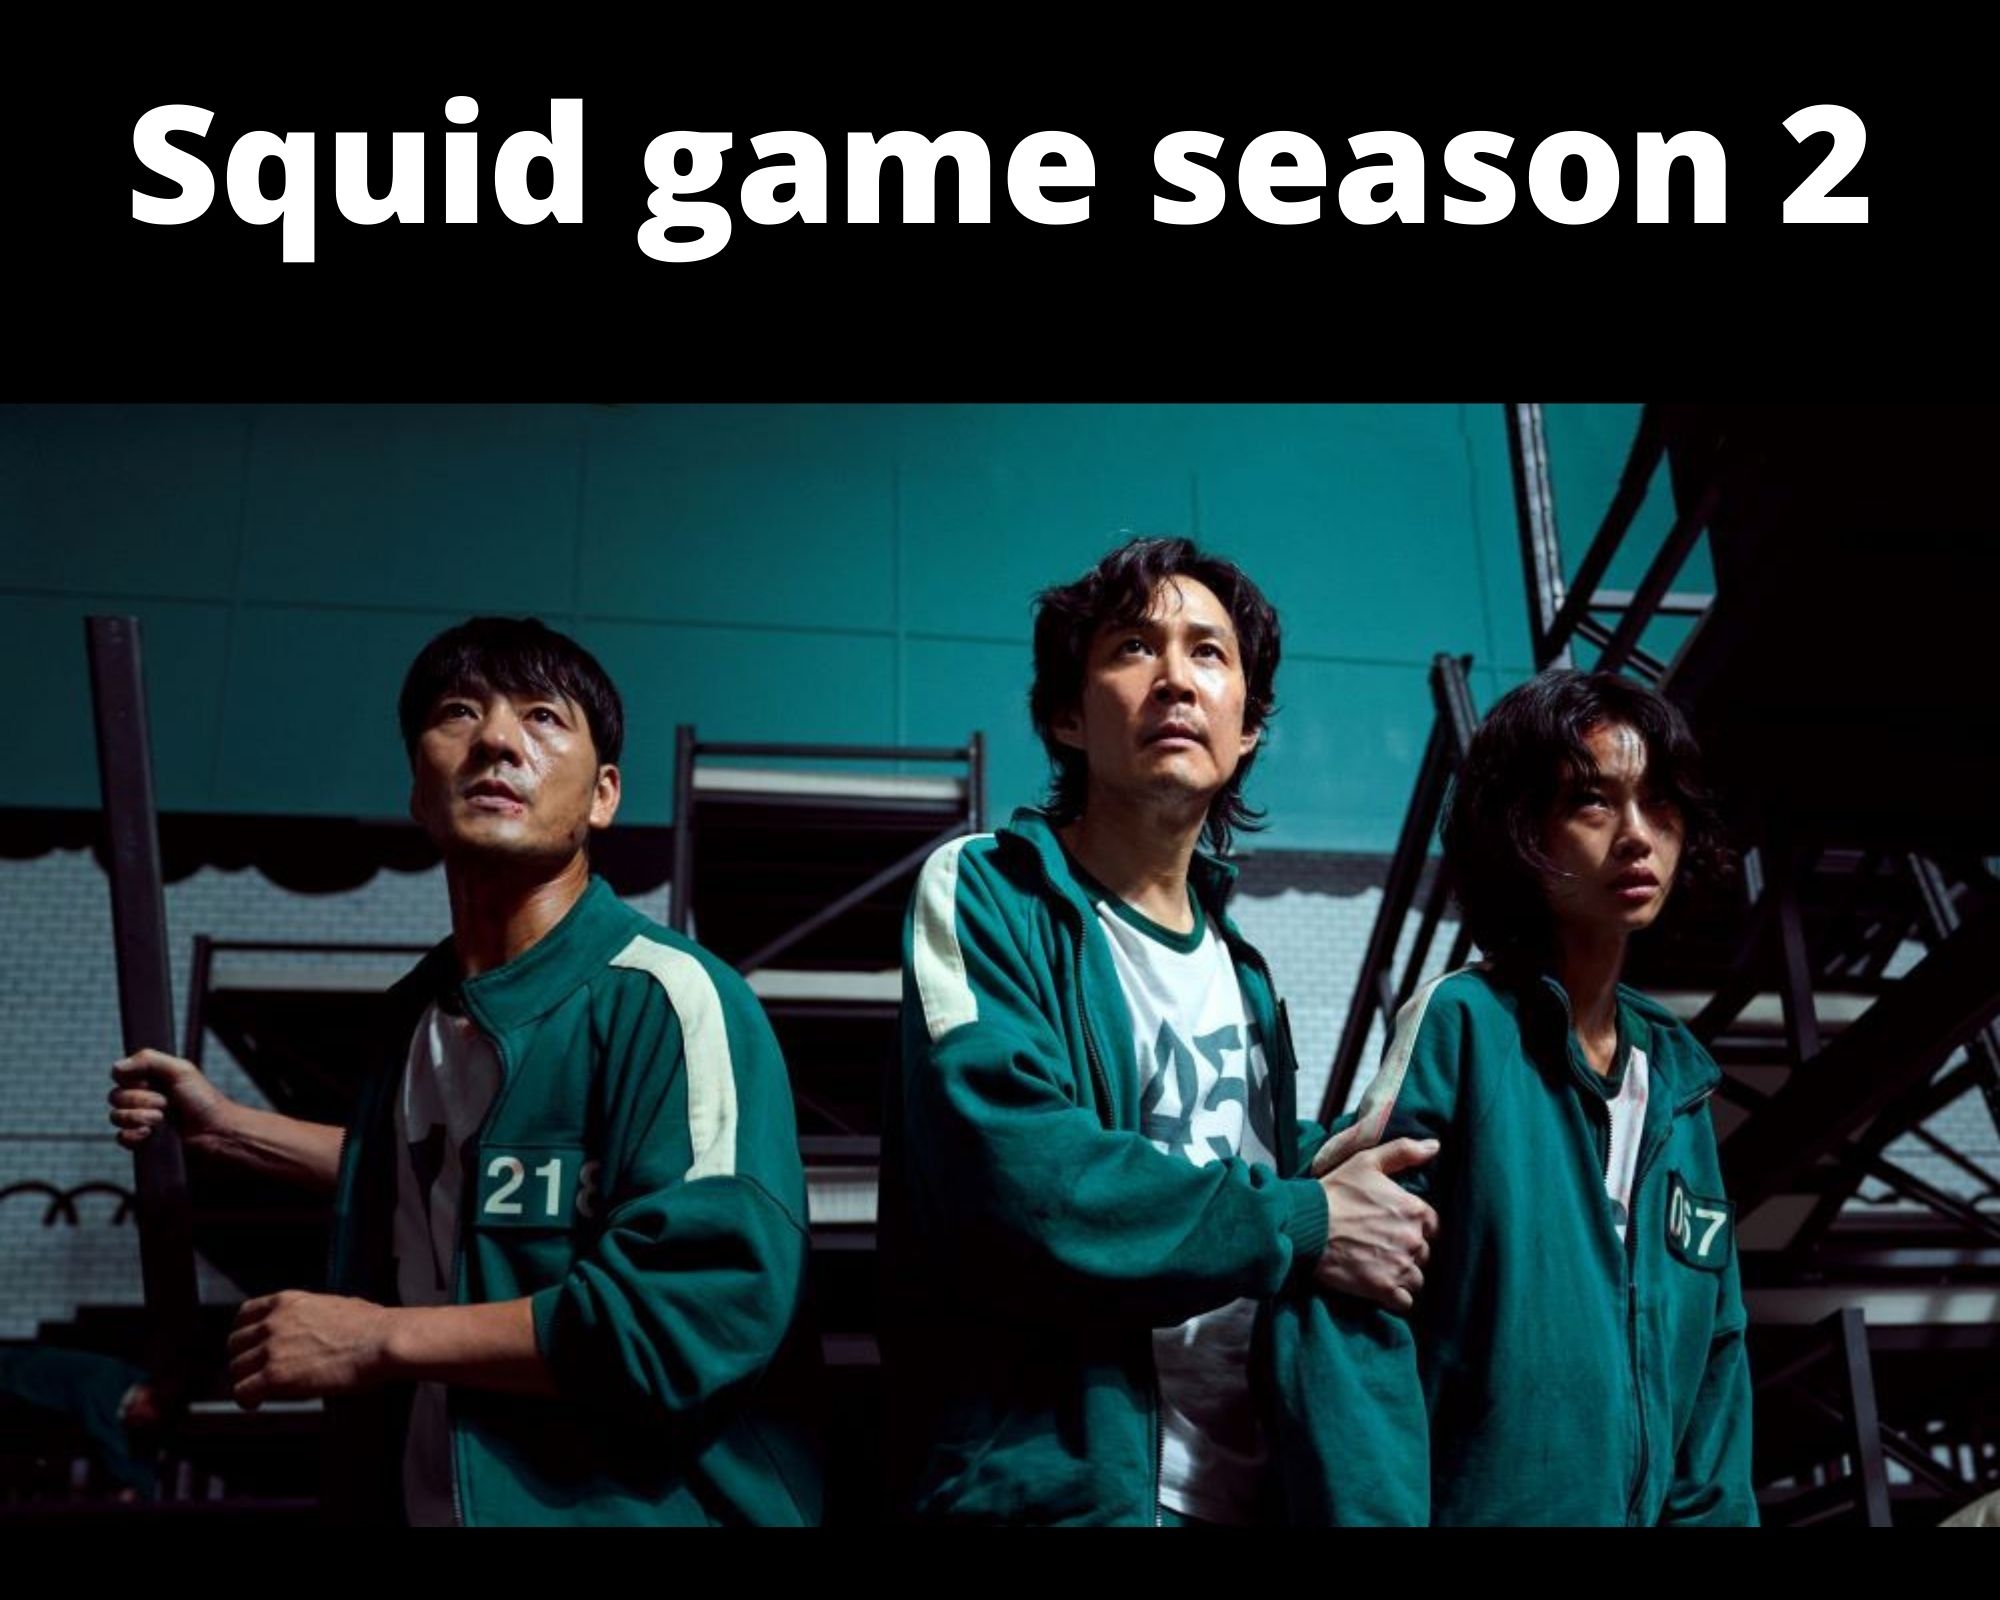 Squid game season 2